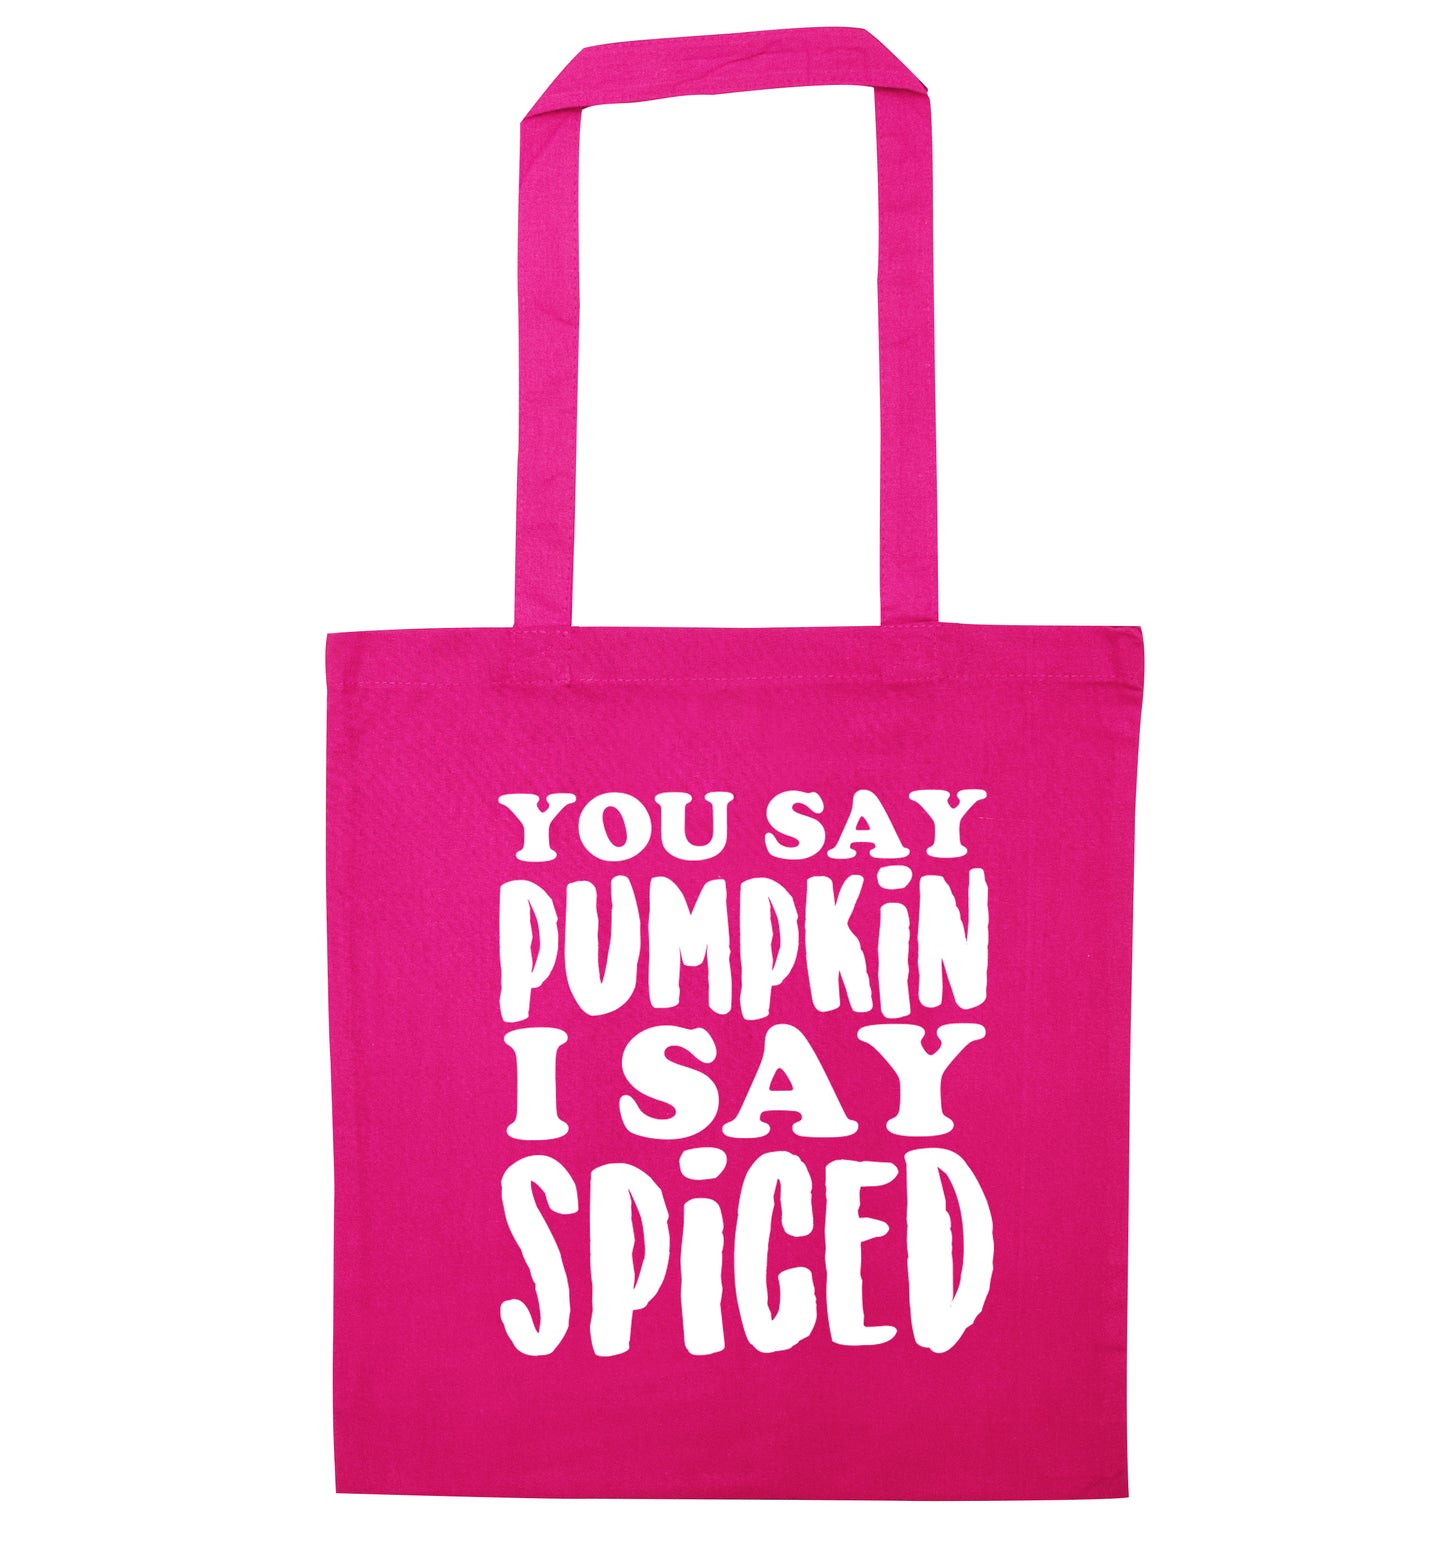 You say pumpkin I say spiced! pink tote bag